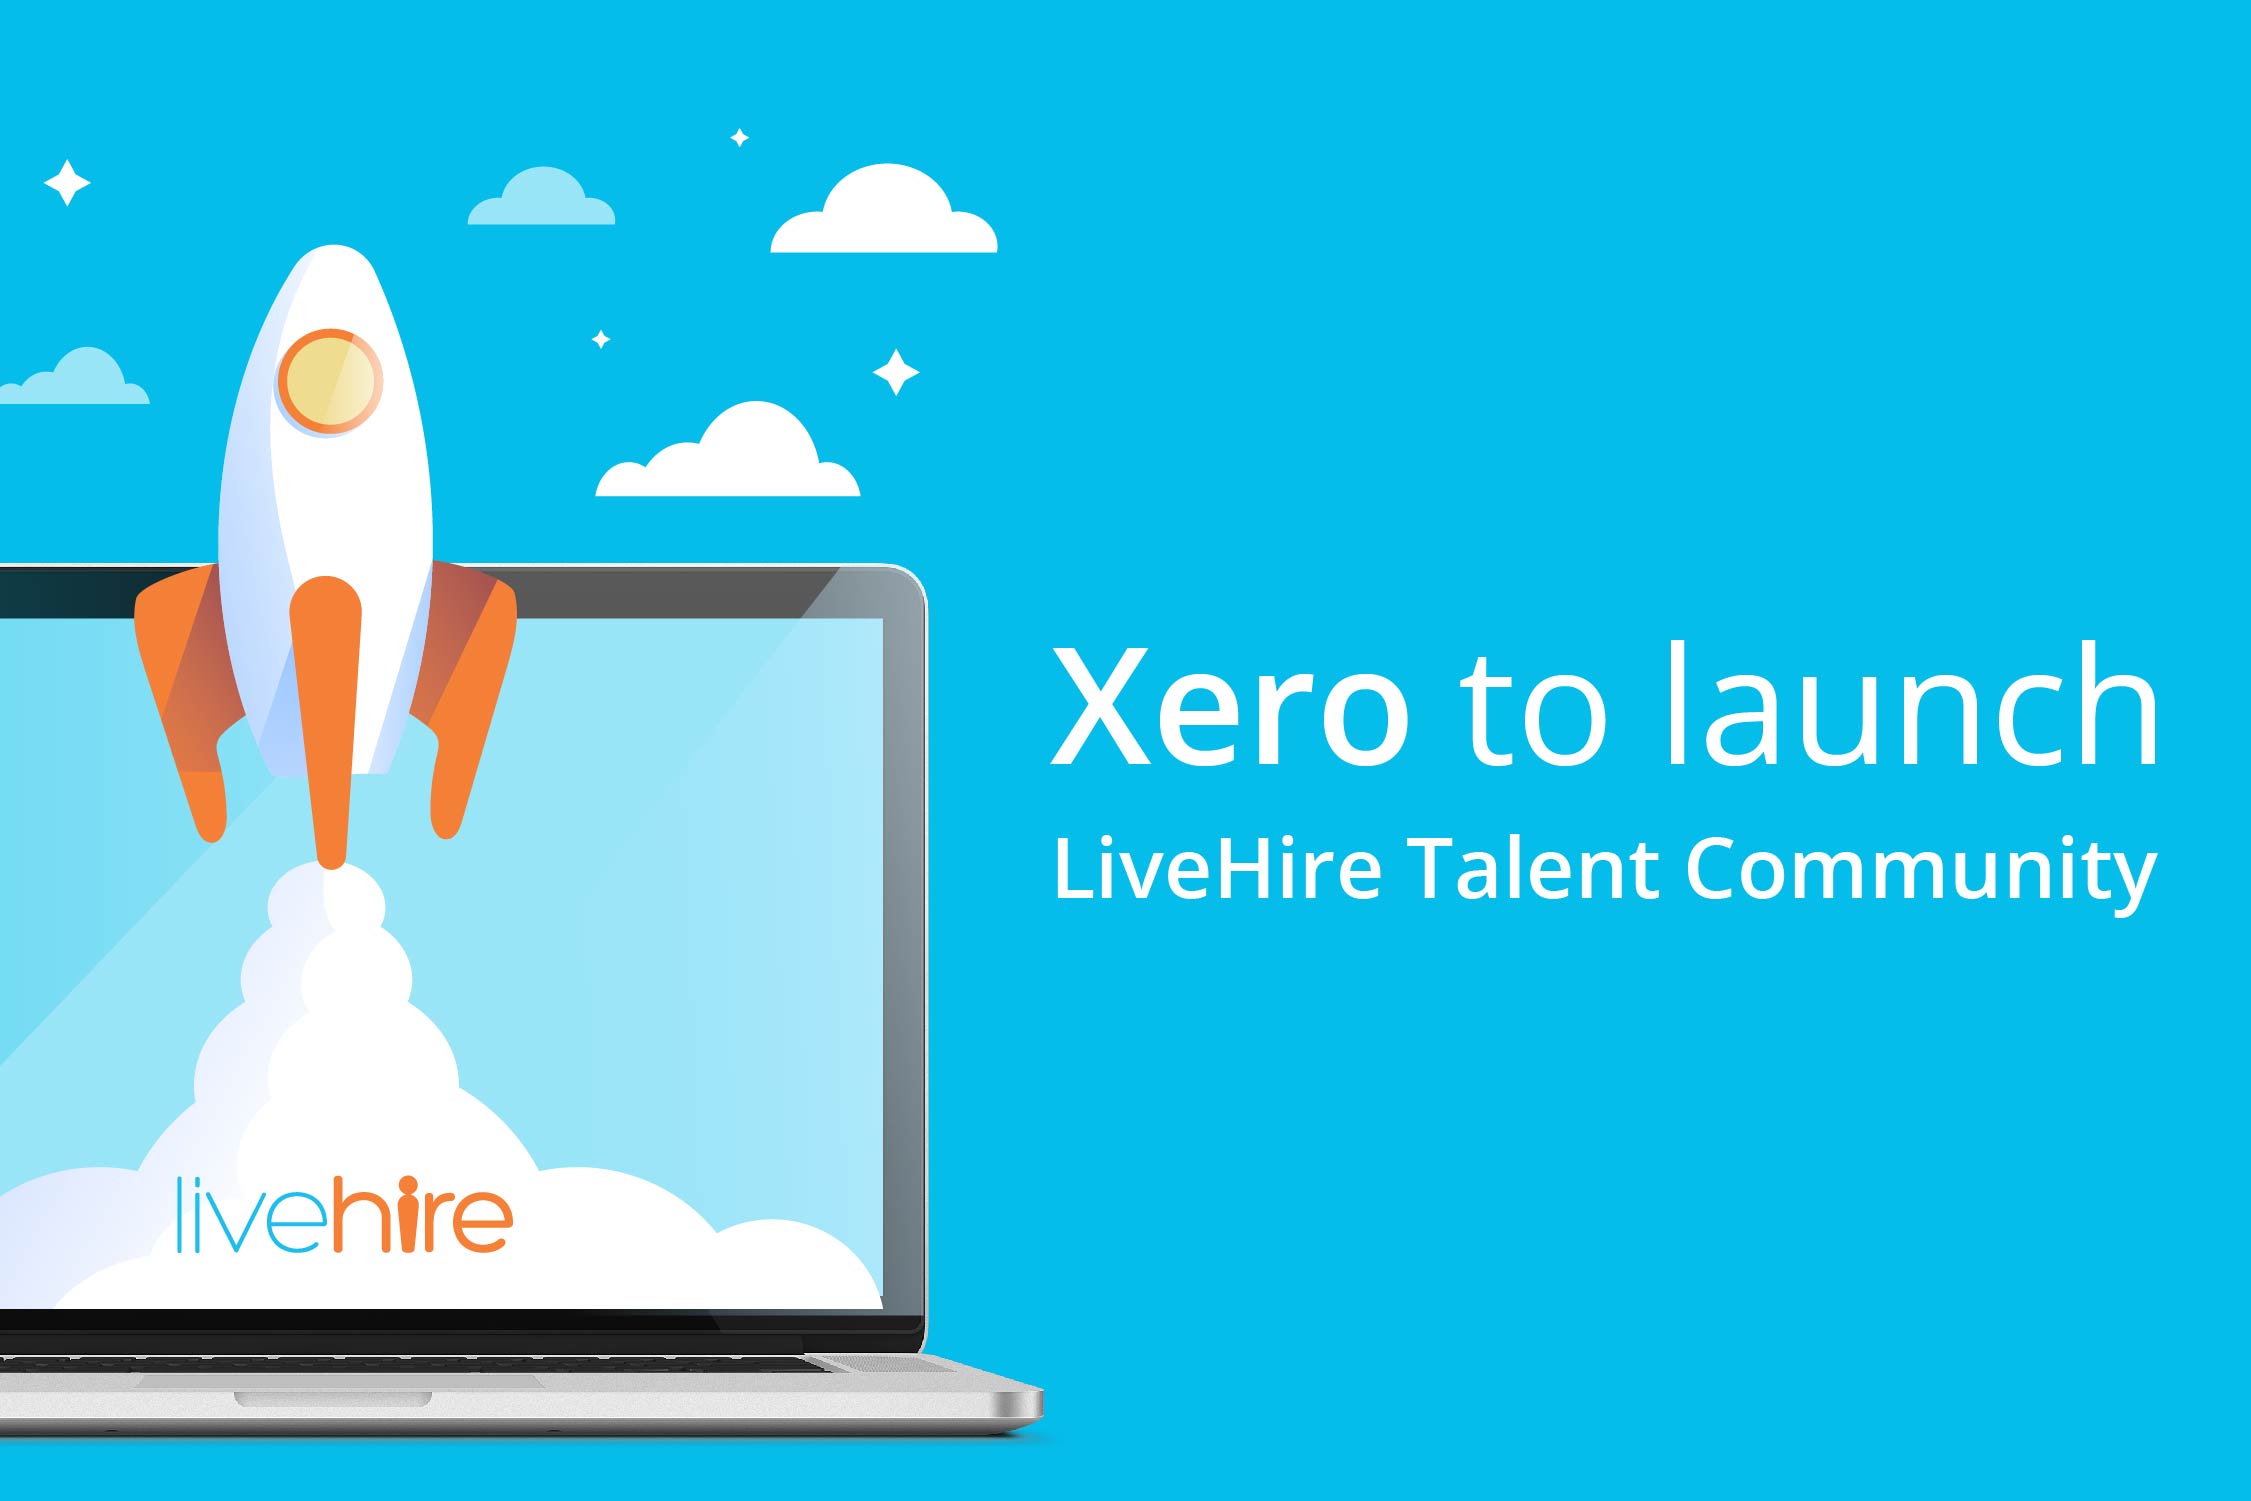 Xero to launch LiveHire Talent Community